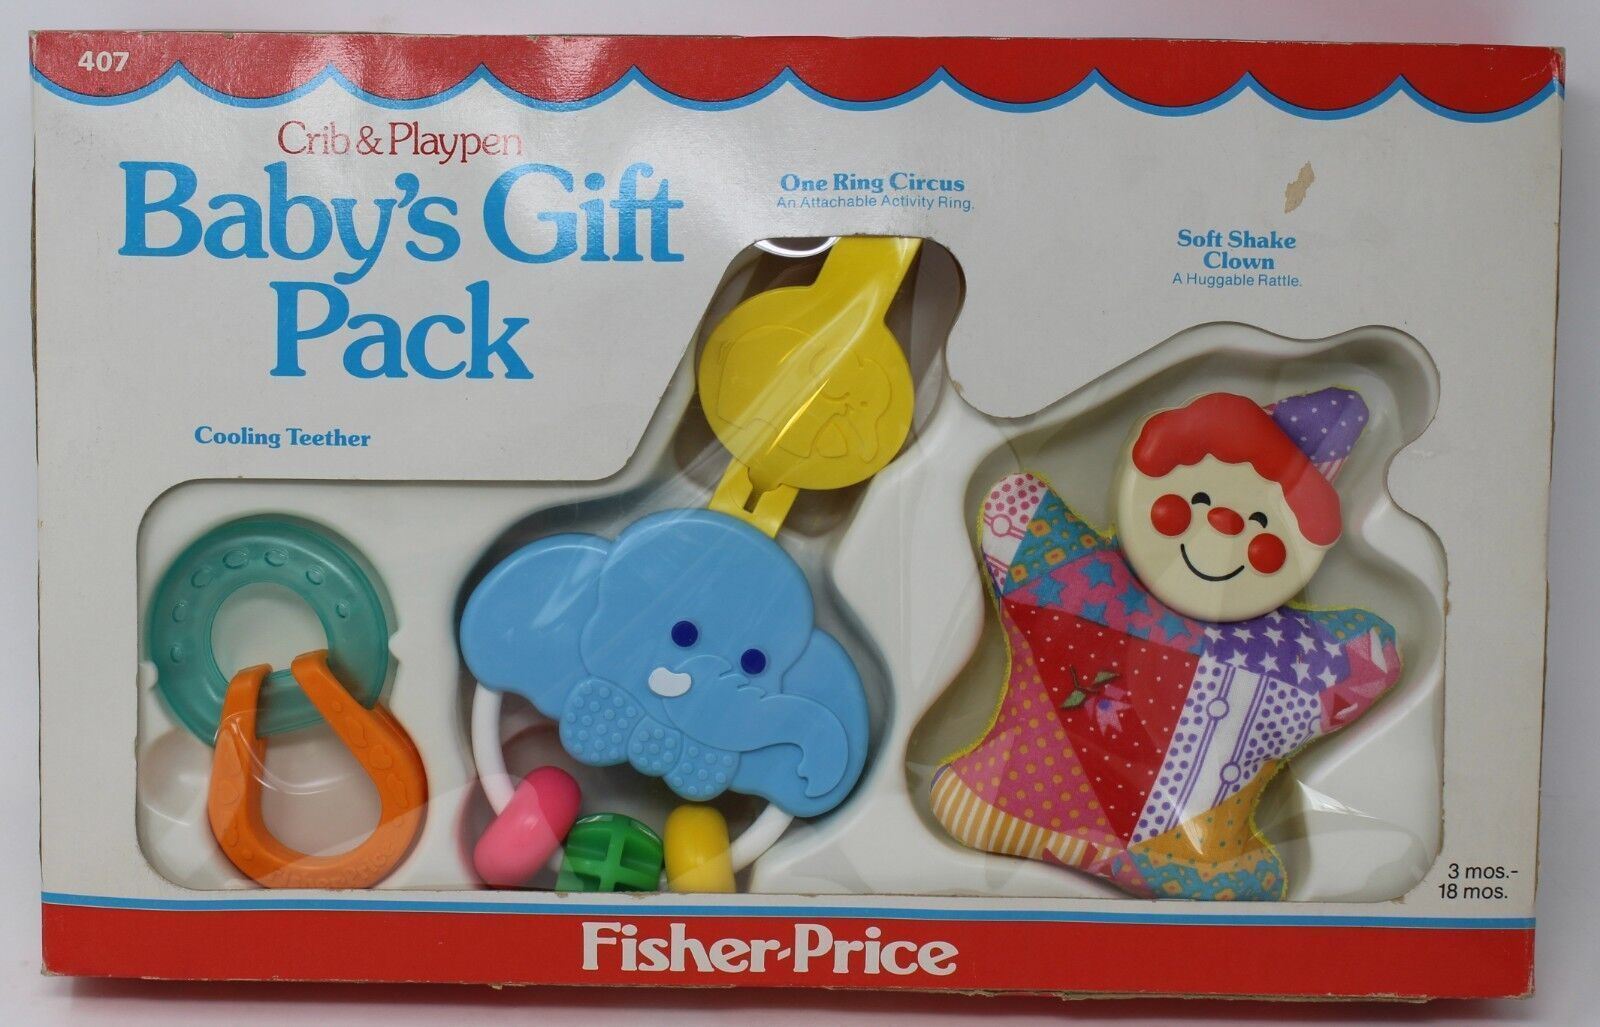 Vintage Fisher Price Crib Playpen Babys Gift Pack 1983 One Ring Circus Clown 407 - $55.99